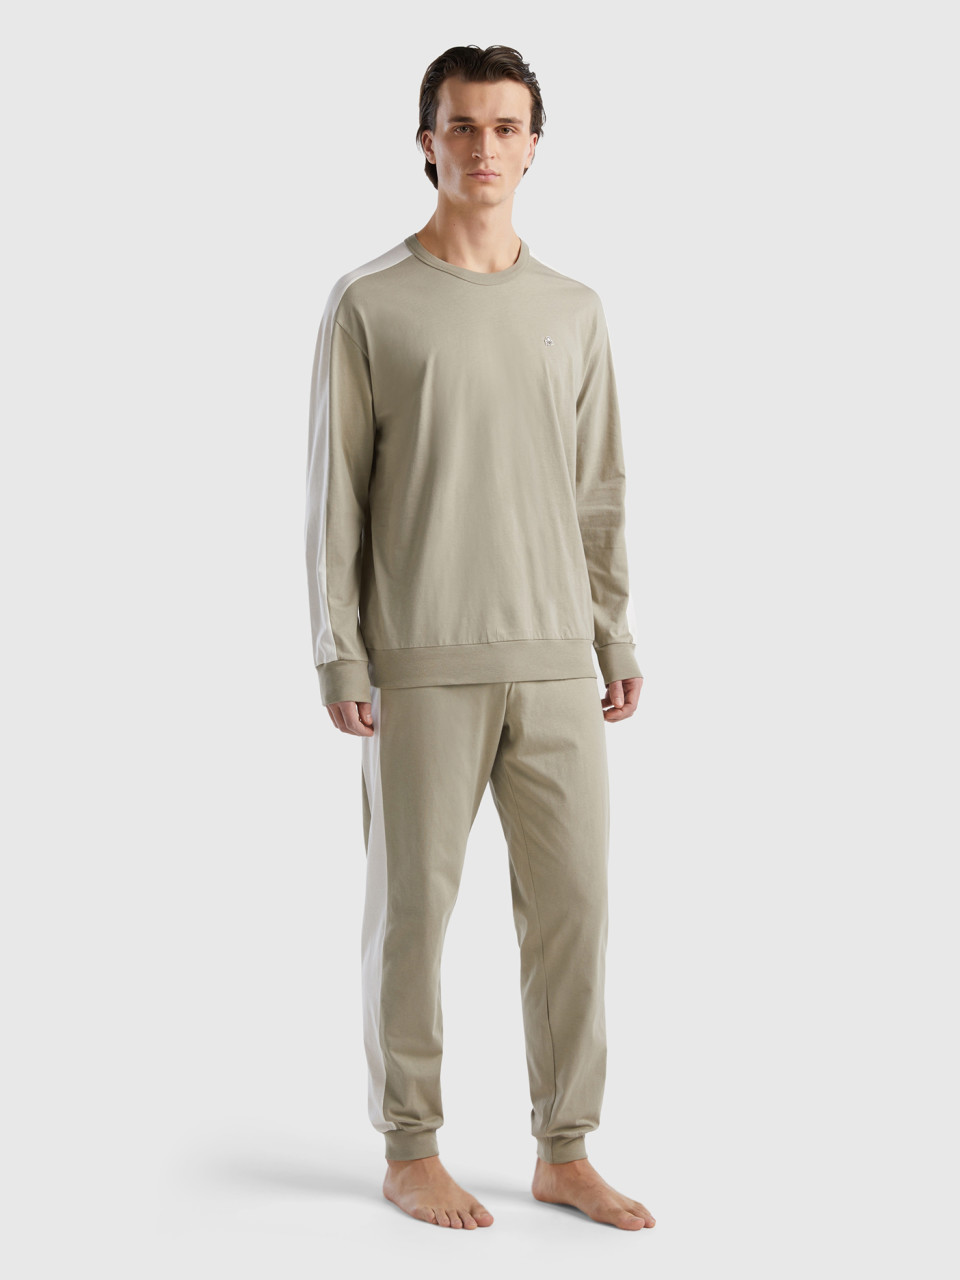 Benetton, Pyjamas With Side Stripes, Beige, Men